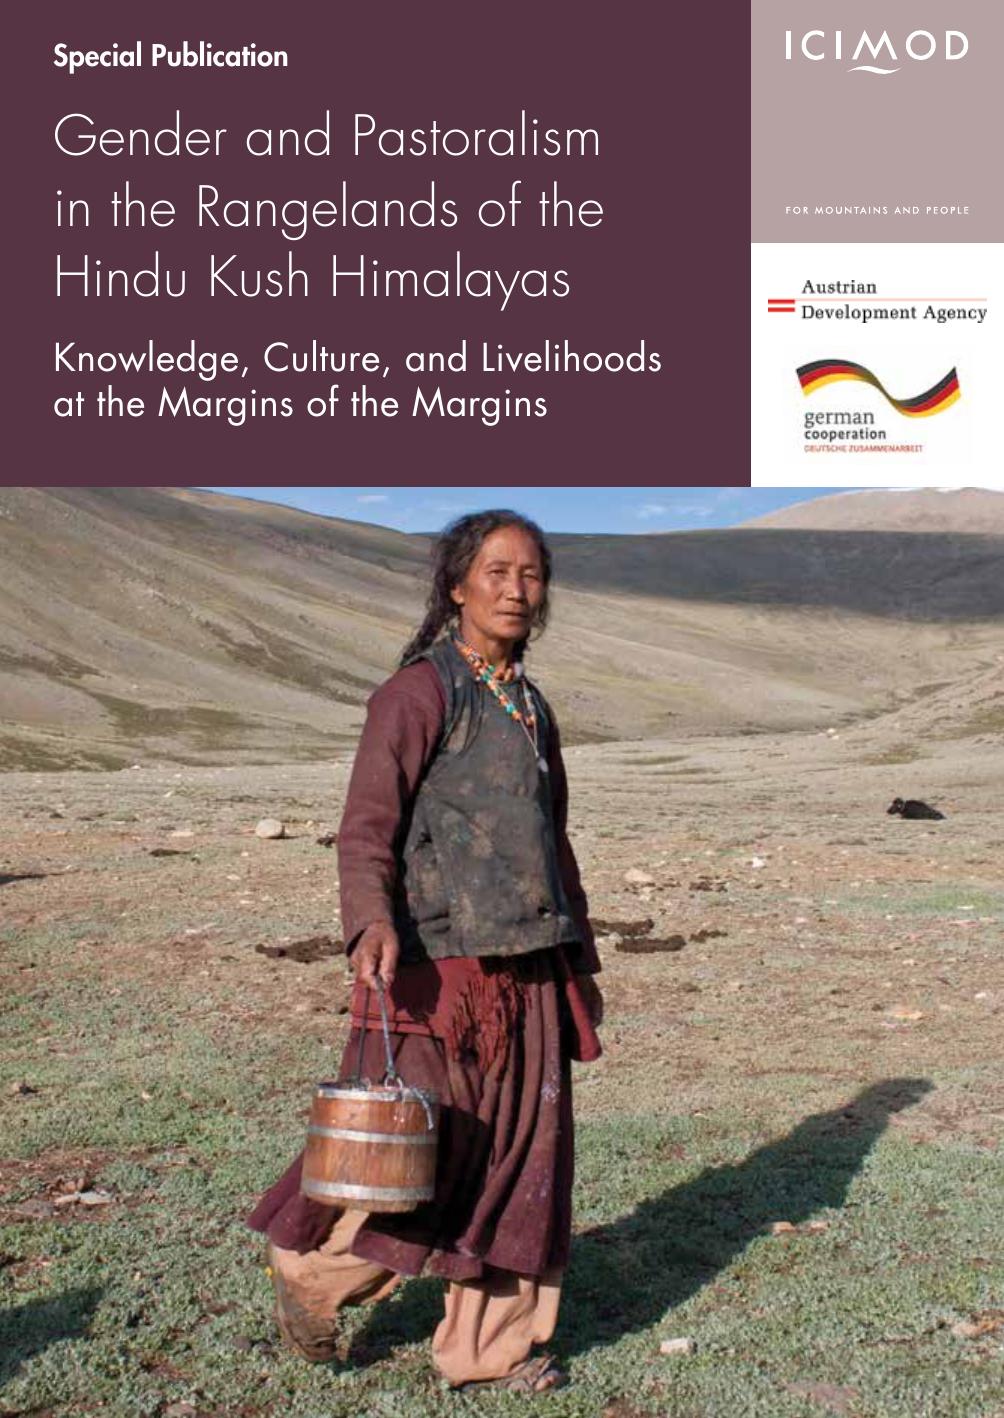 Gender and Pastoralism in the Rangelands of the Hindu Kush Himalayas 2016